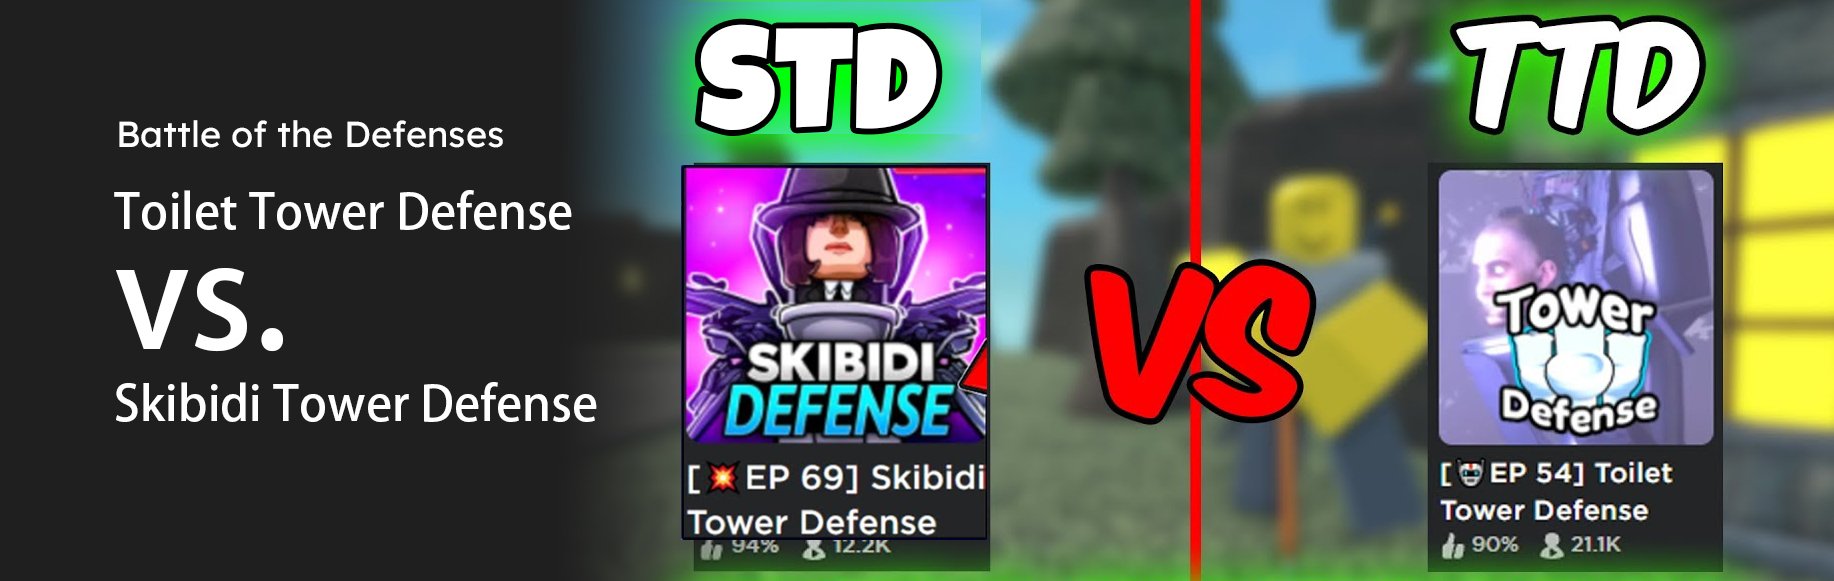 Battle of the Defenses: Toilet Tower Defense vs. Skibidi Tower Defense